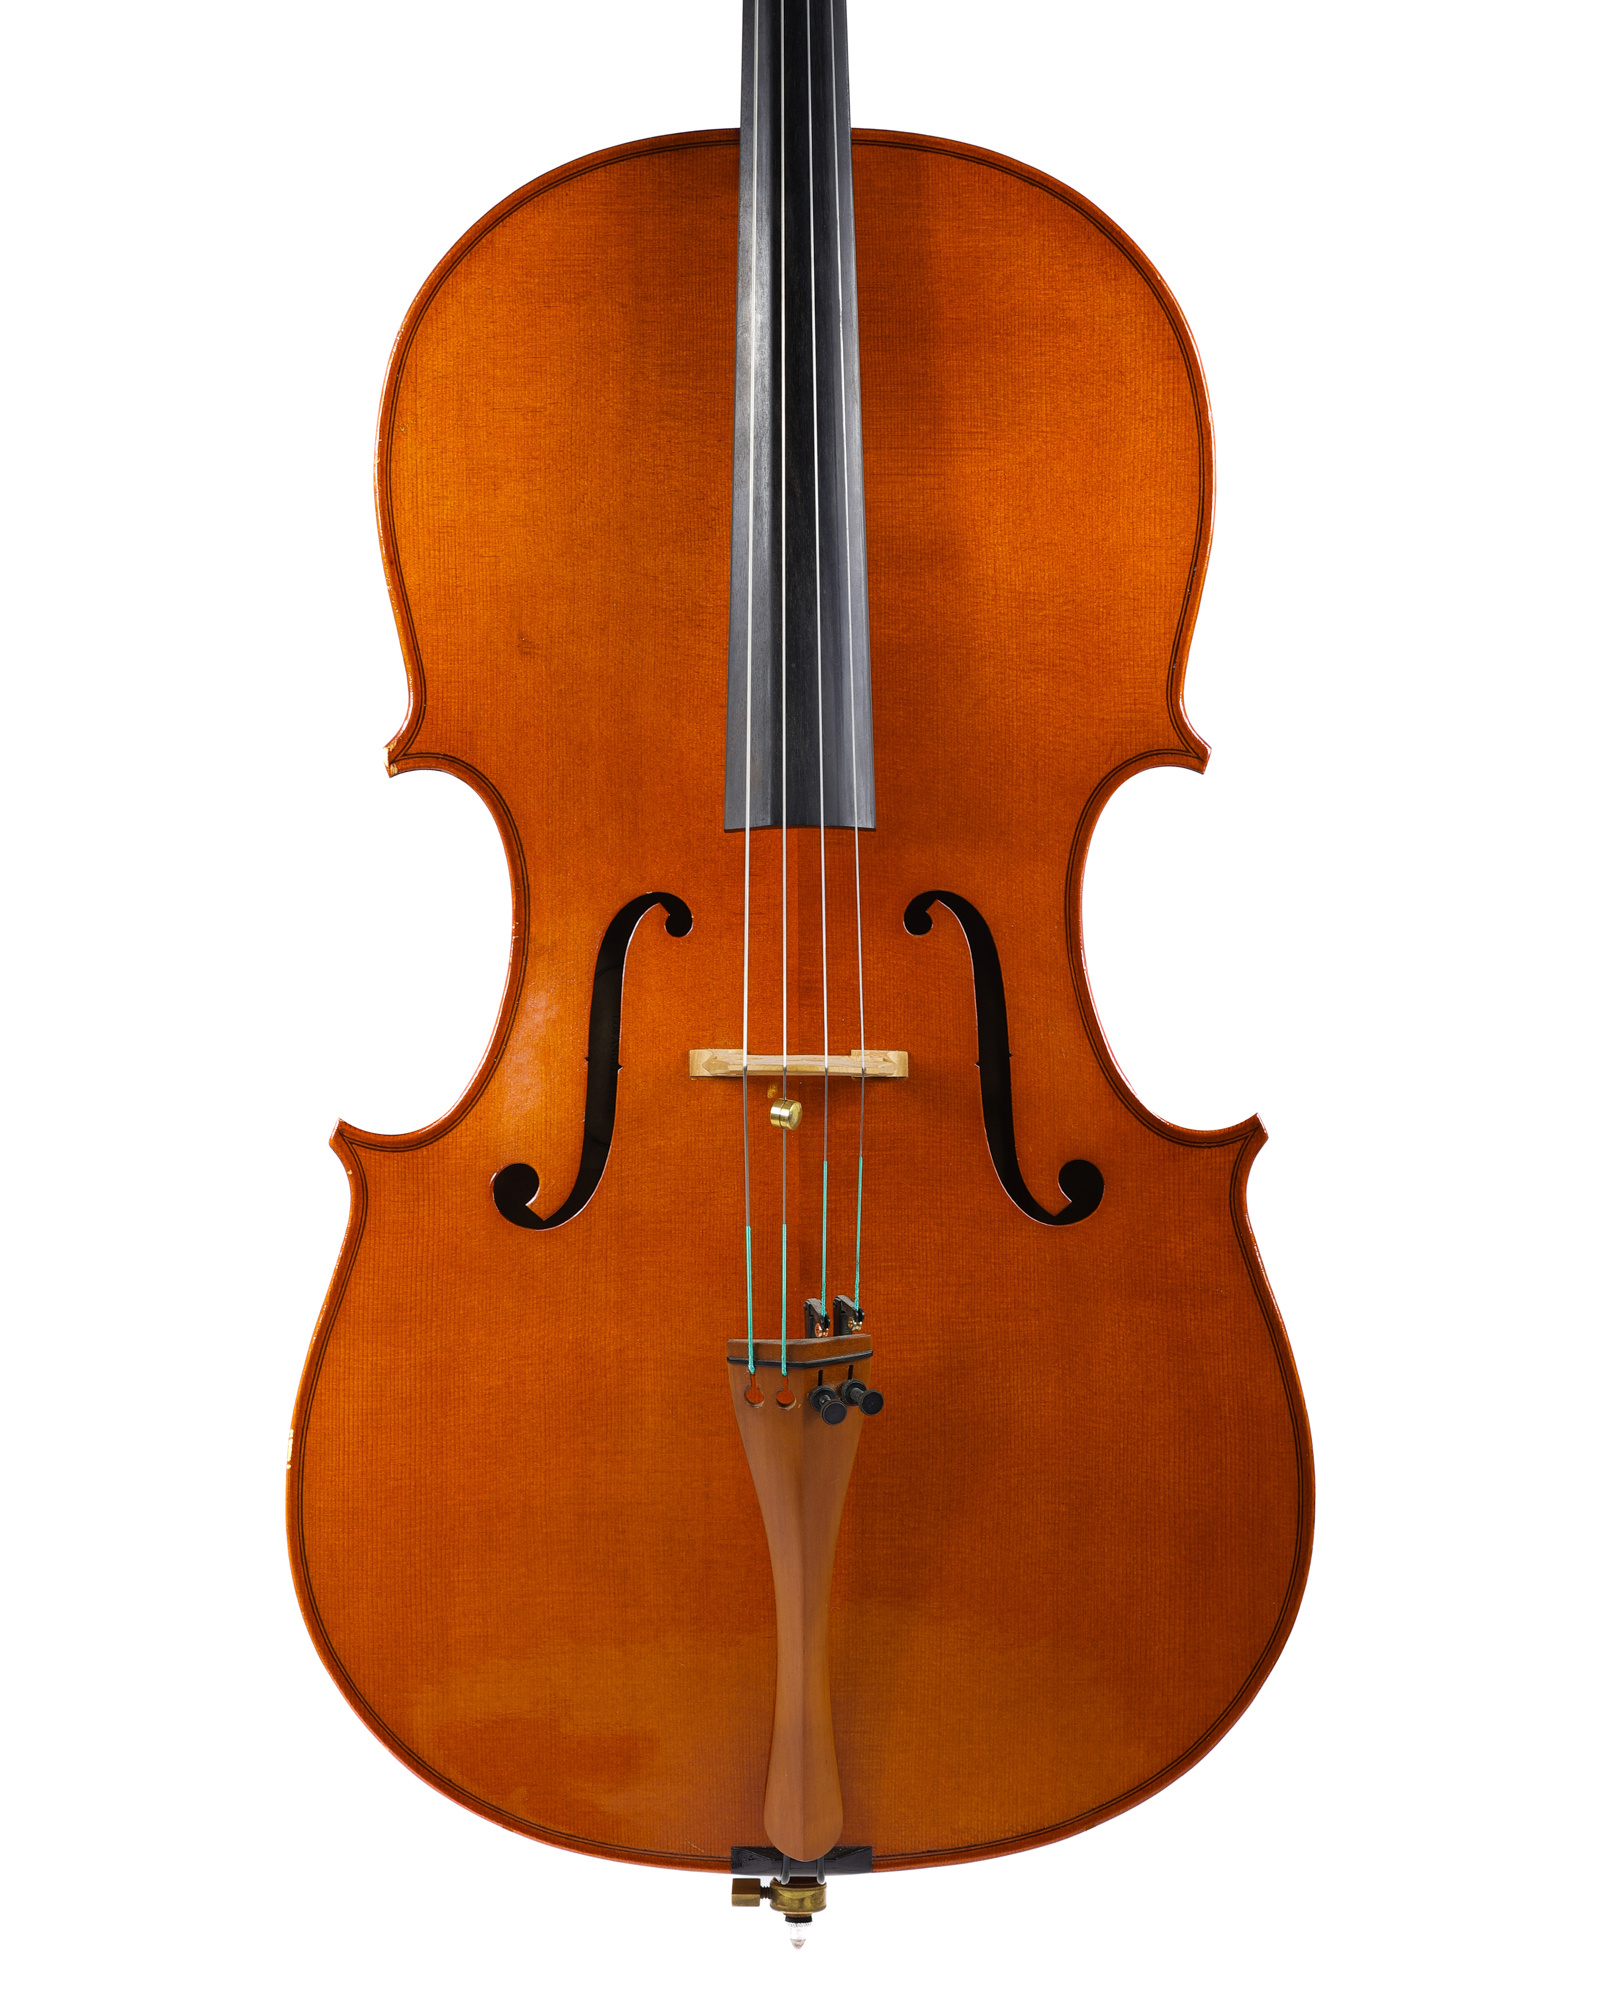 Ivan Zgradic 1972 cello, copy of Francesco Ruggieri 1687, Los Angeles, USA